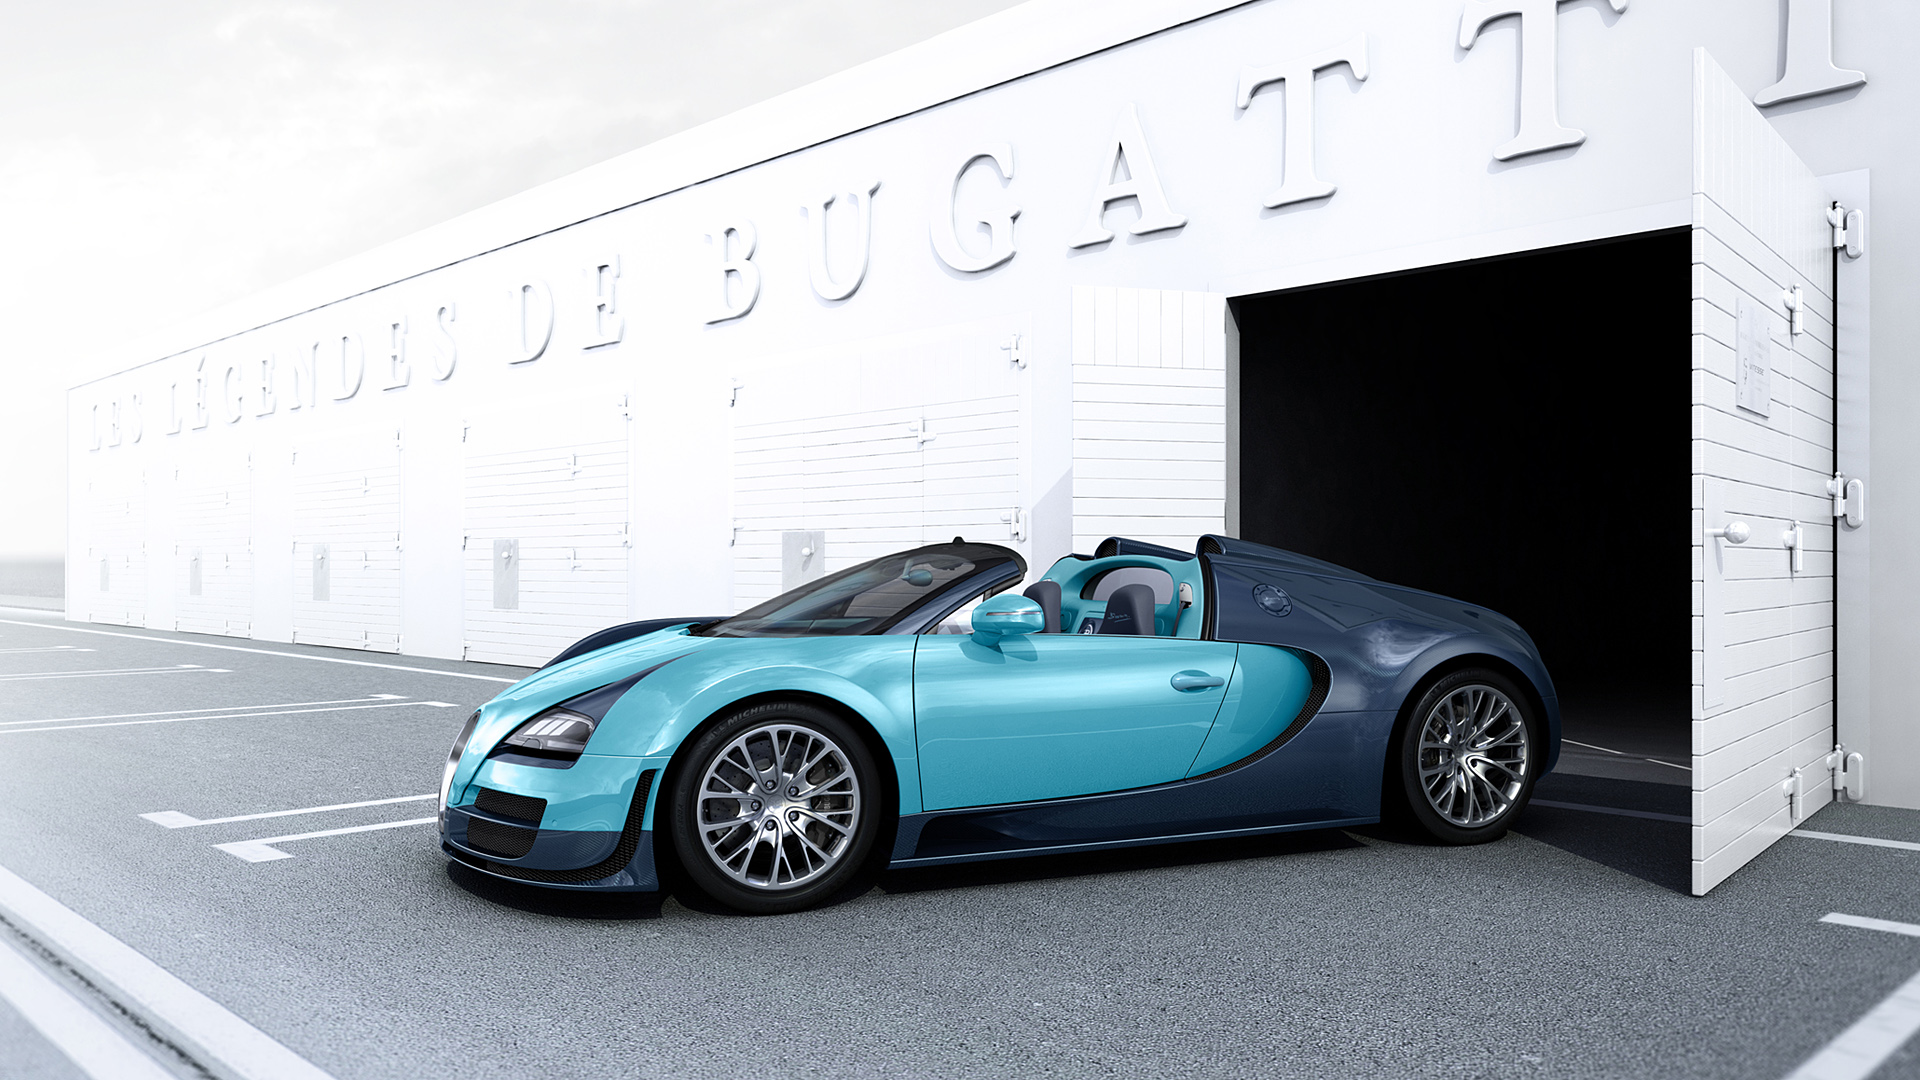  2013 Bugatti Veyron Jean-Pierre Wimille Wallpaper.